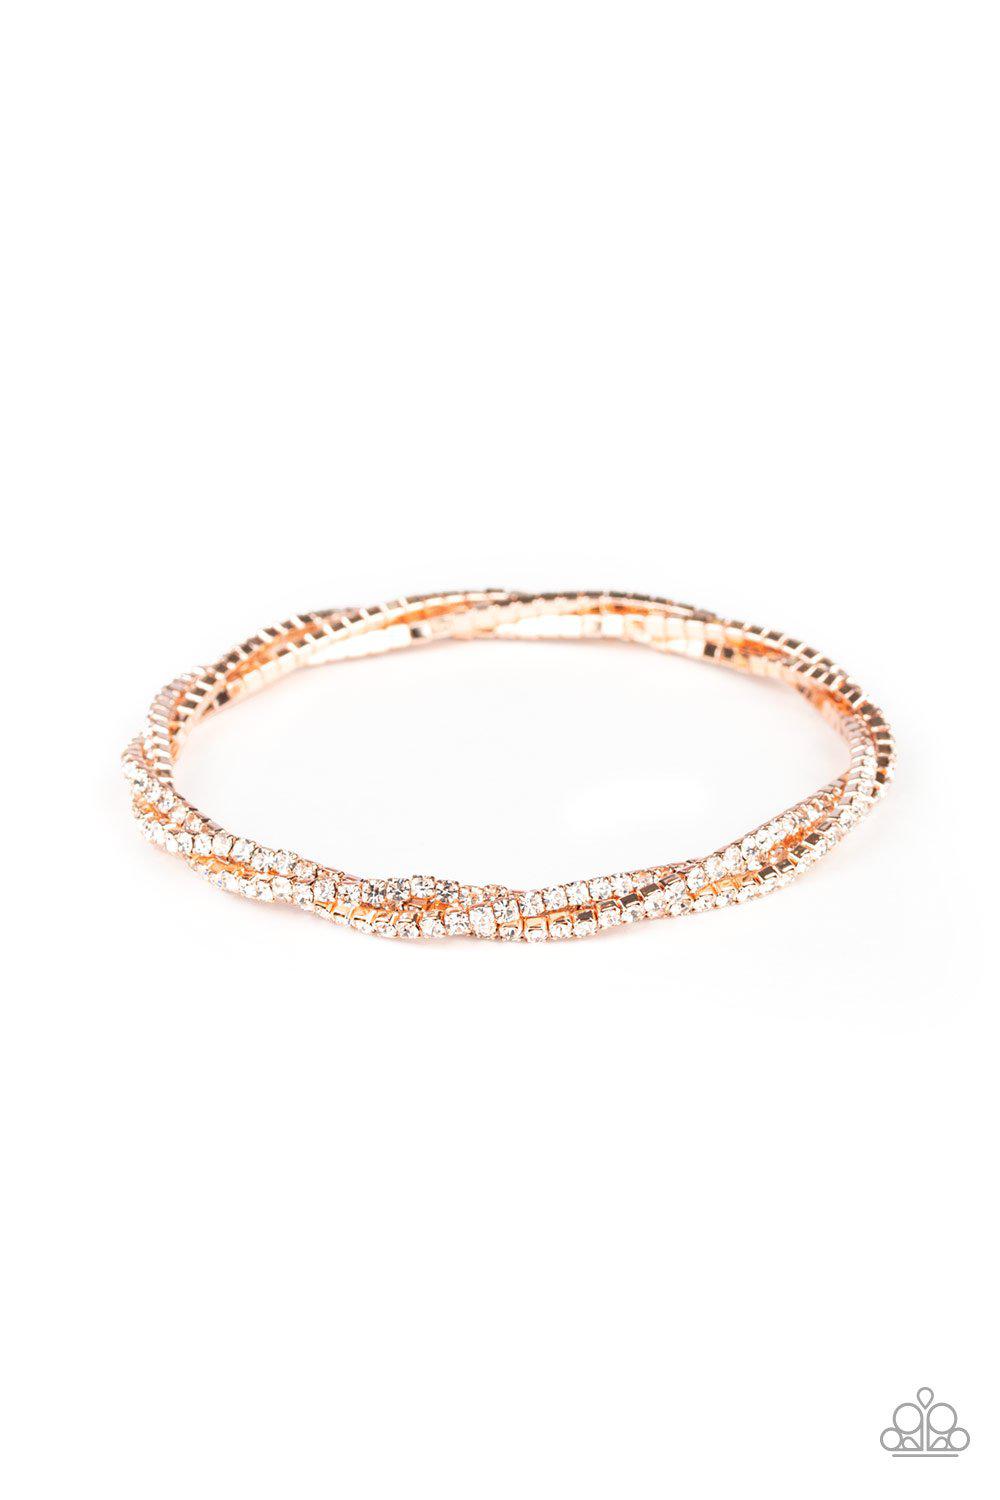 Glitzy Gleam Rose Gold and Rhinestone Bracelet - Paparazzi Accessories-CarasShop.com - $5 Jewelry by Cara Jewels